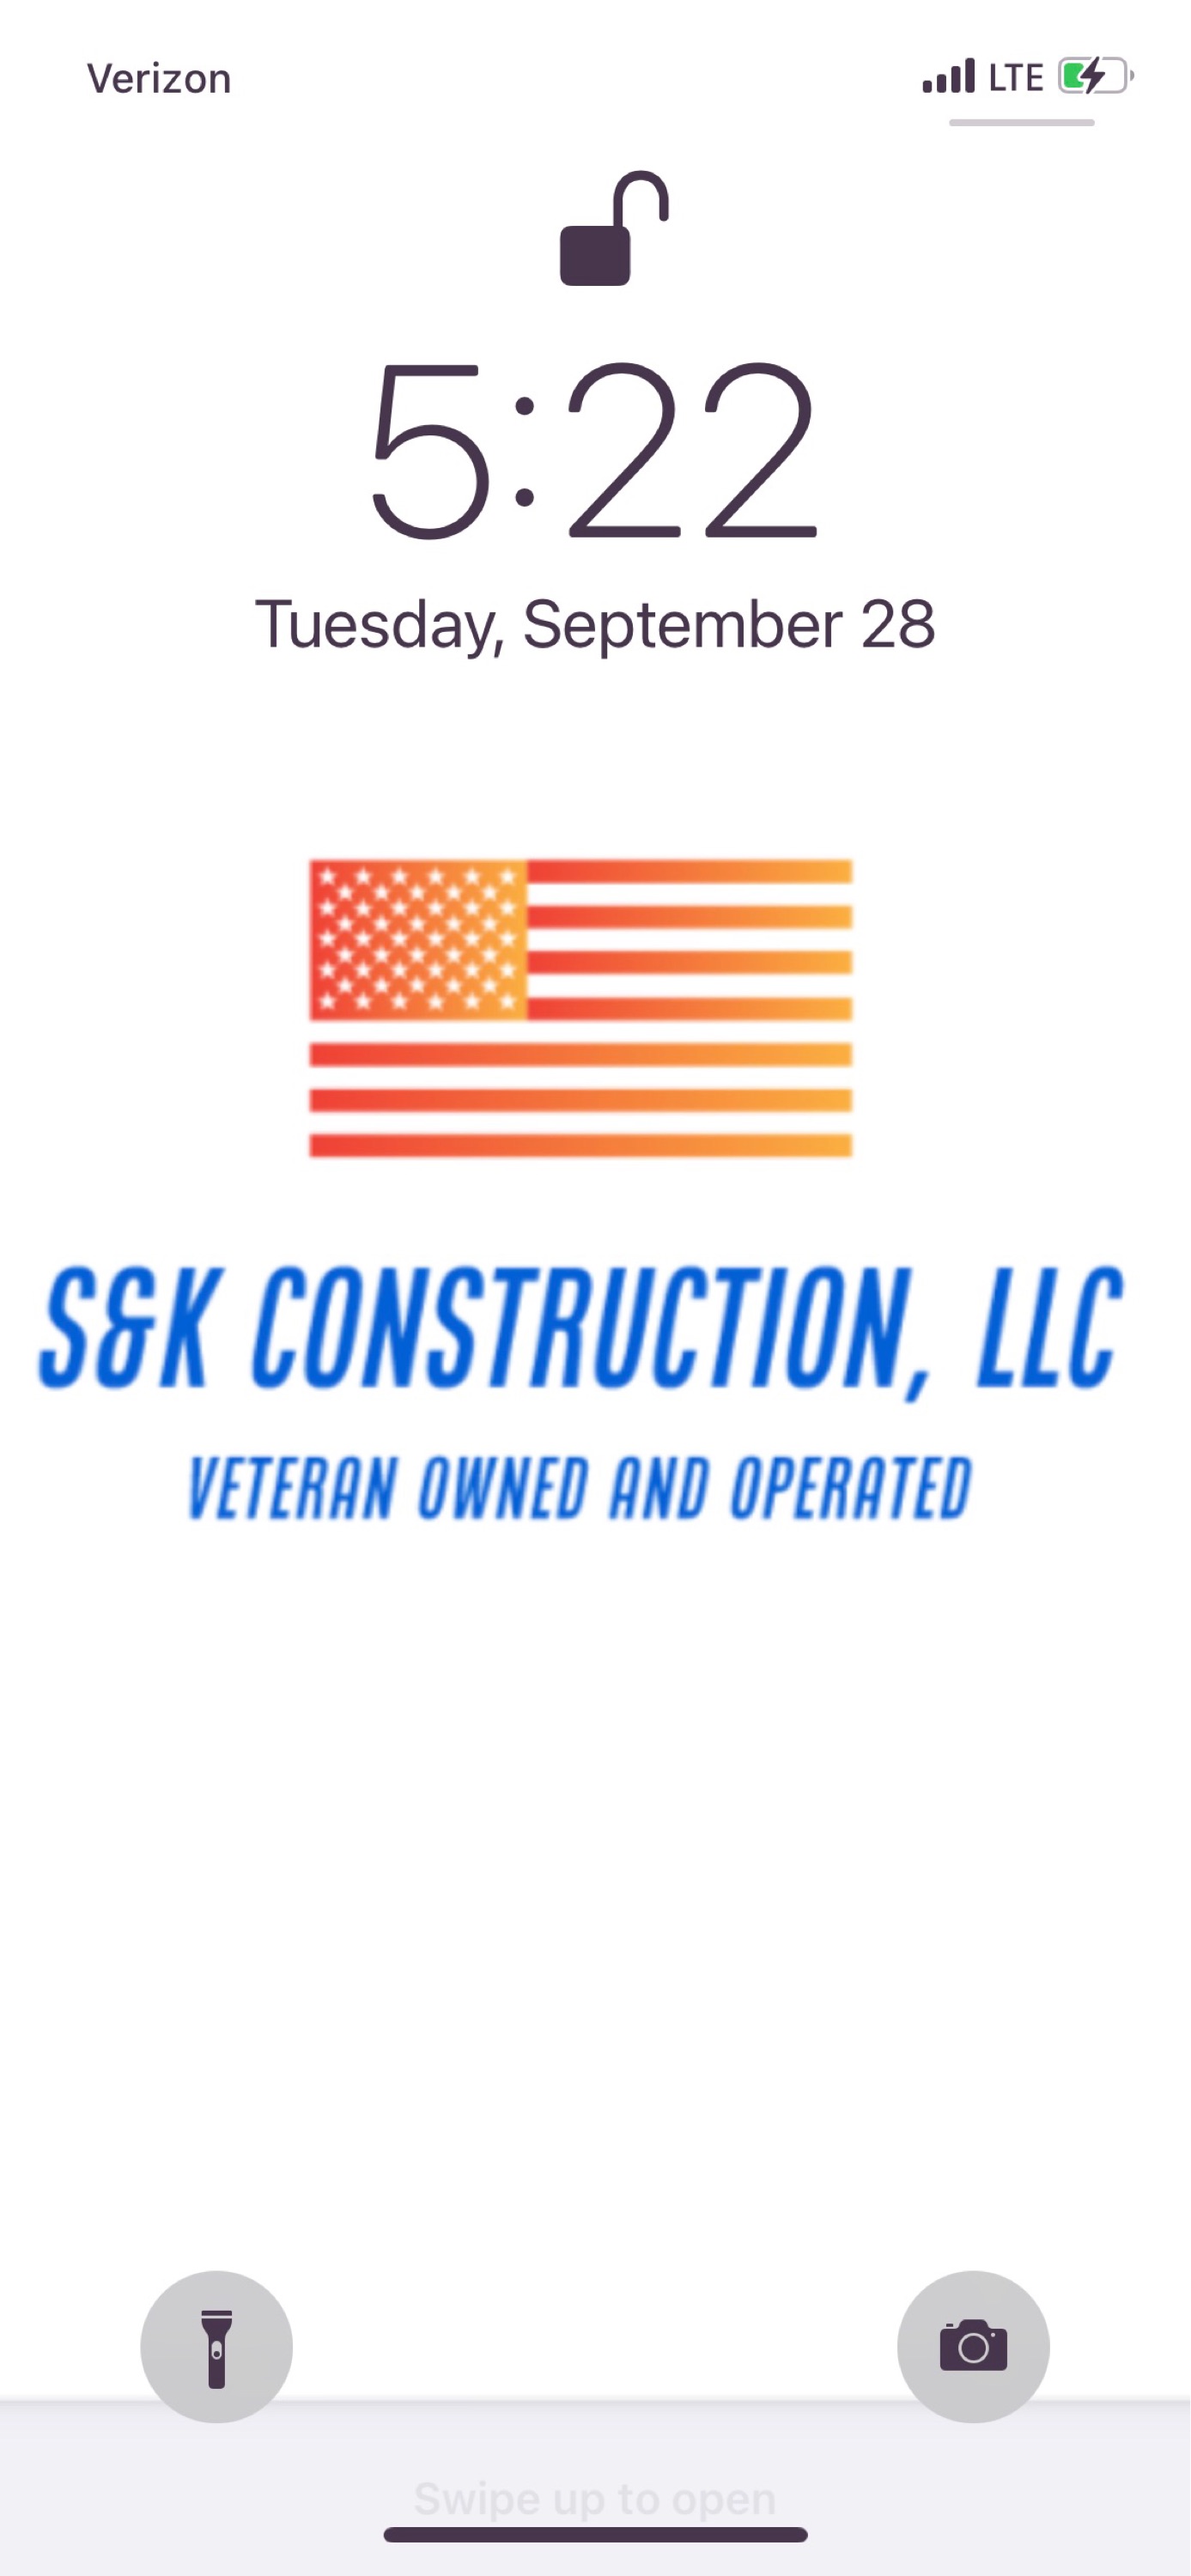 S&K Construction, LLC Logo